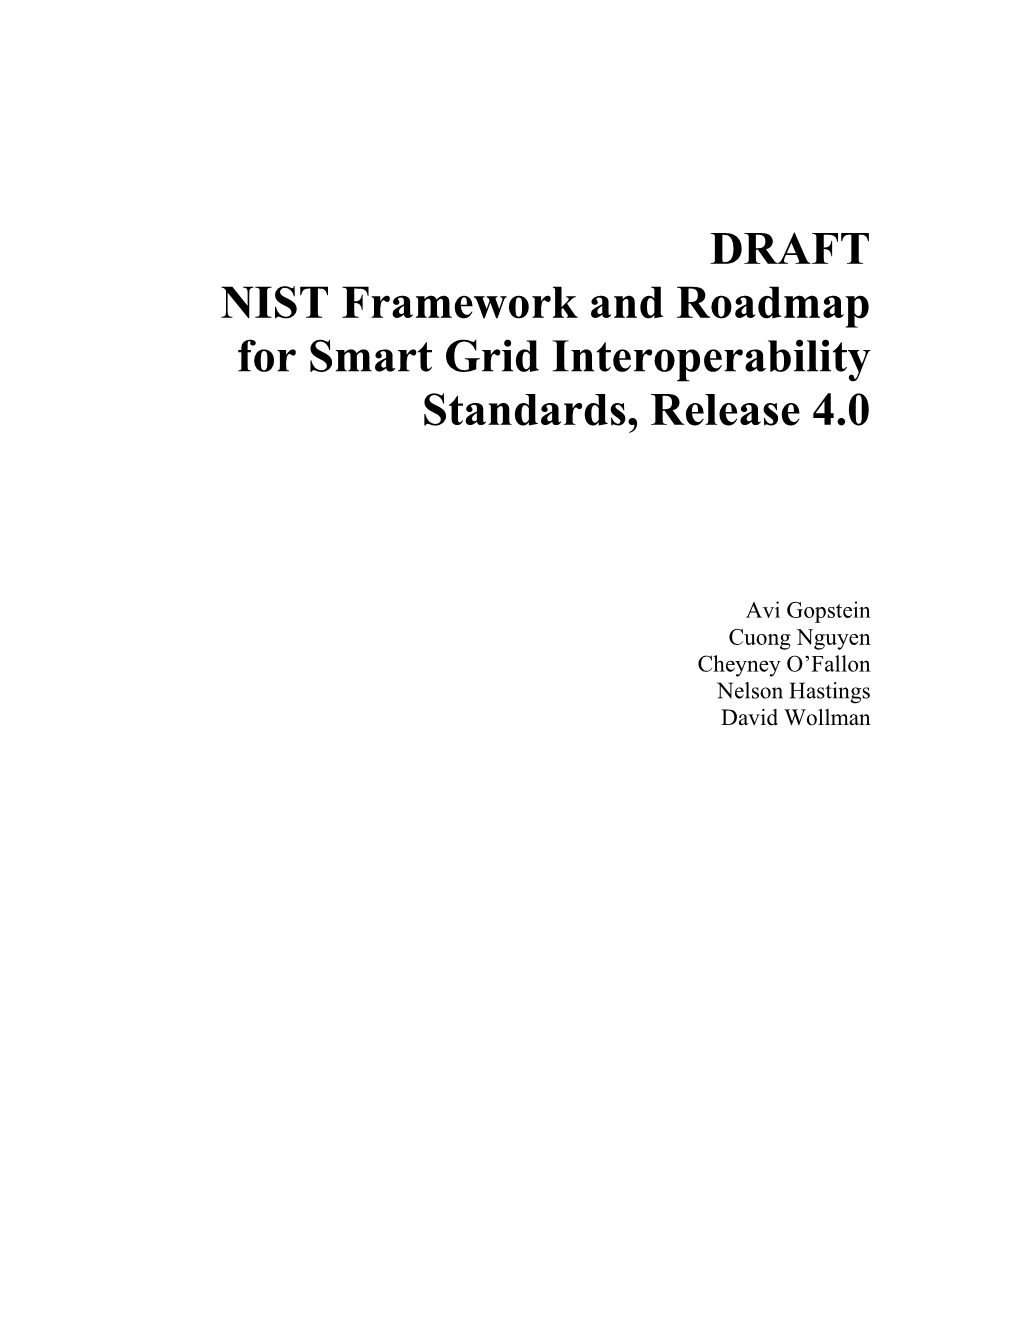 NIST Framework and Roadmap for Smart Grid Interoperability Standards, Release 4.0